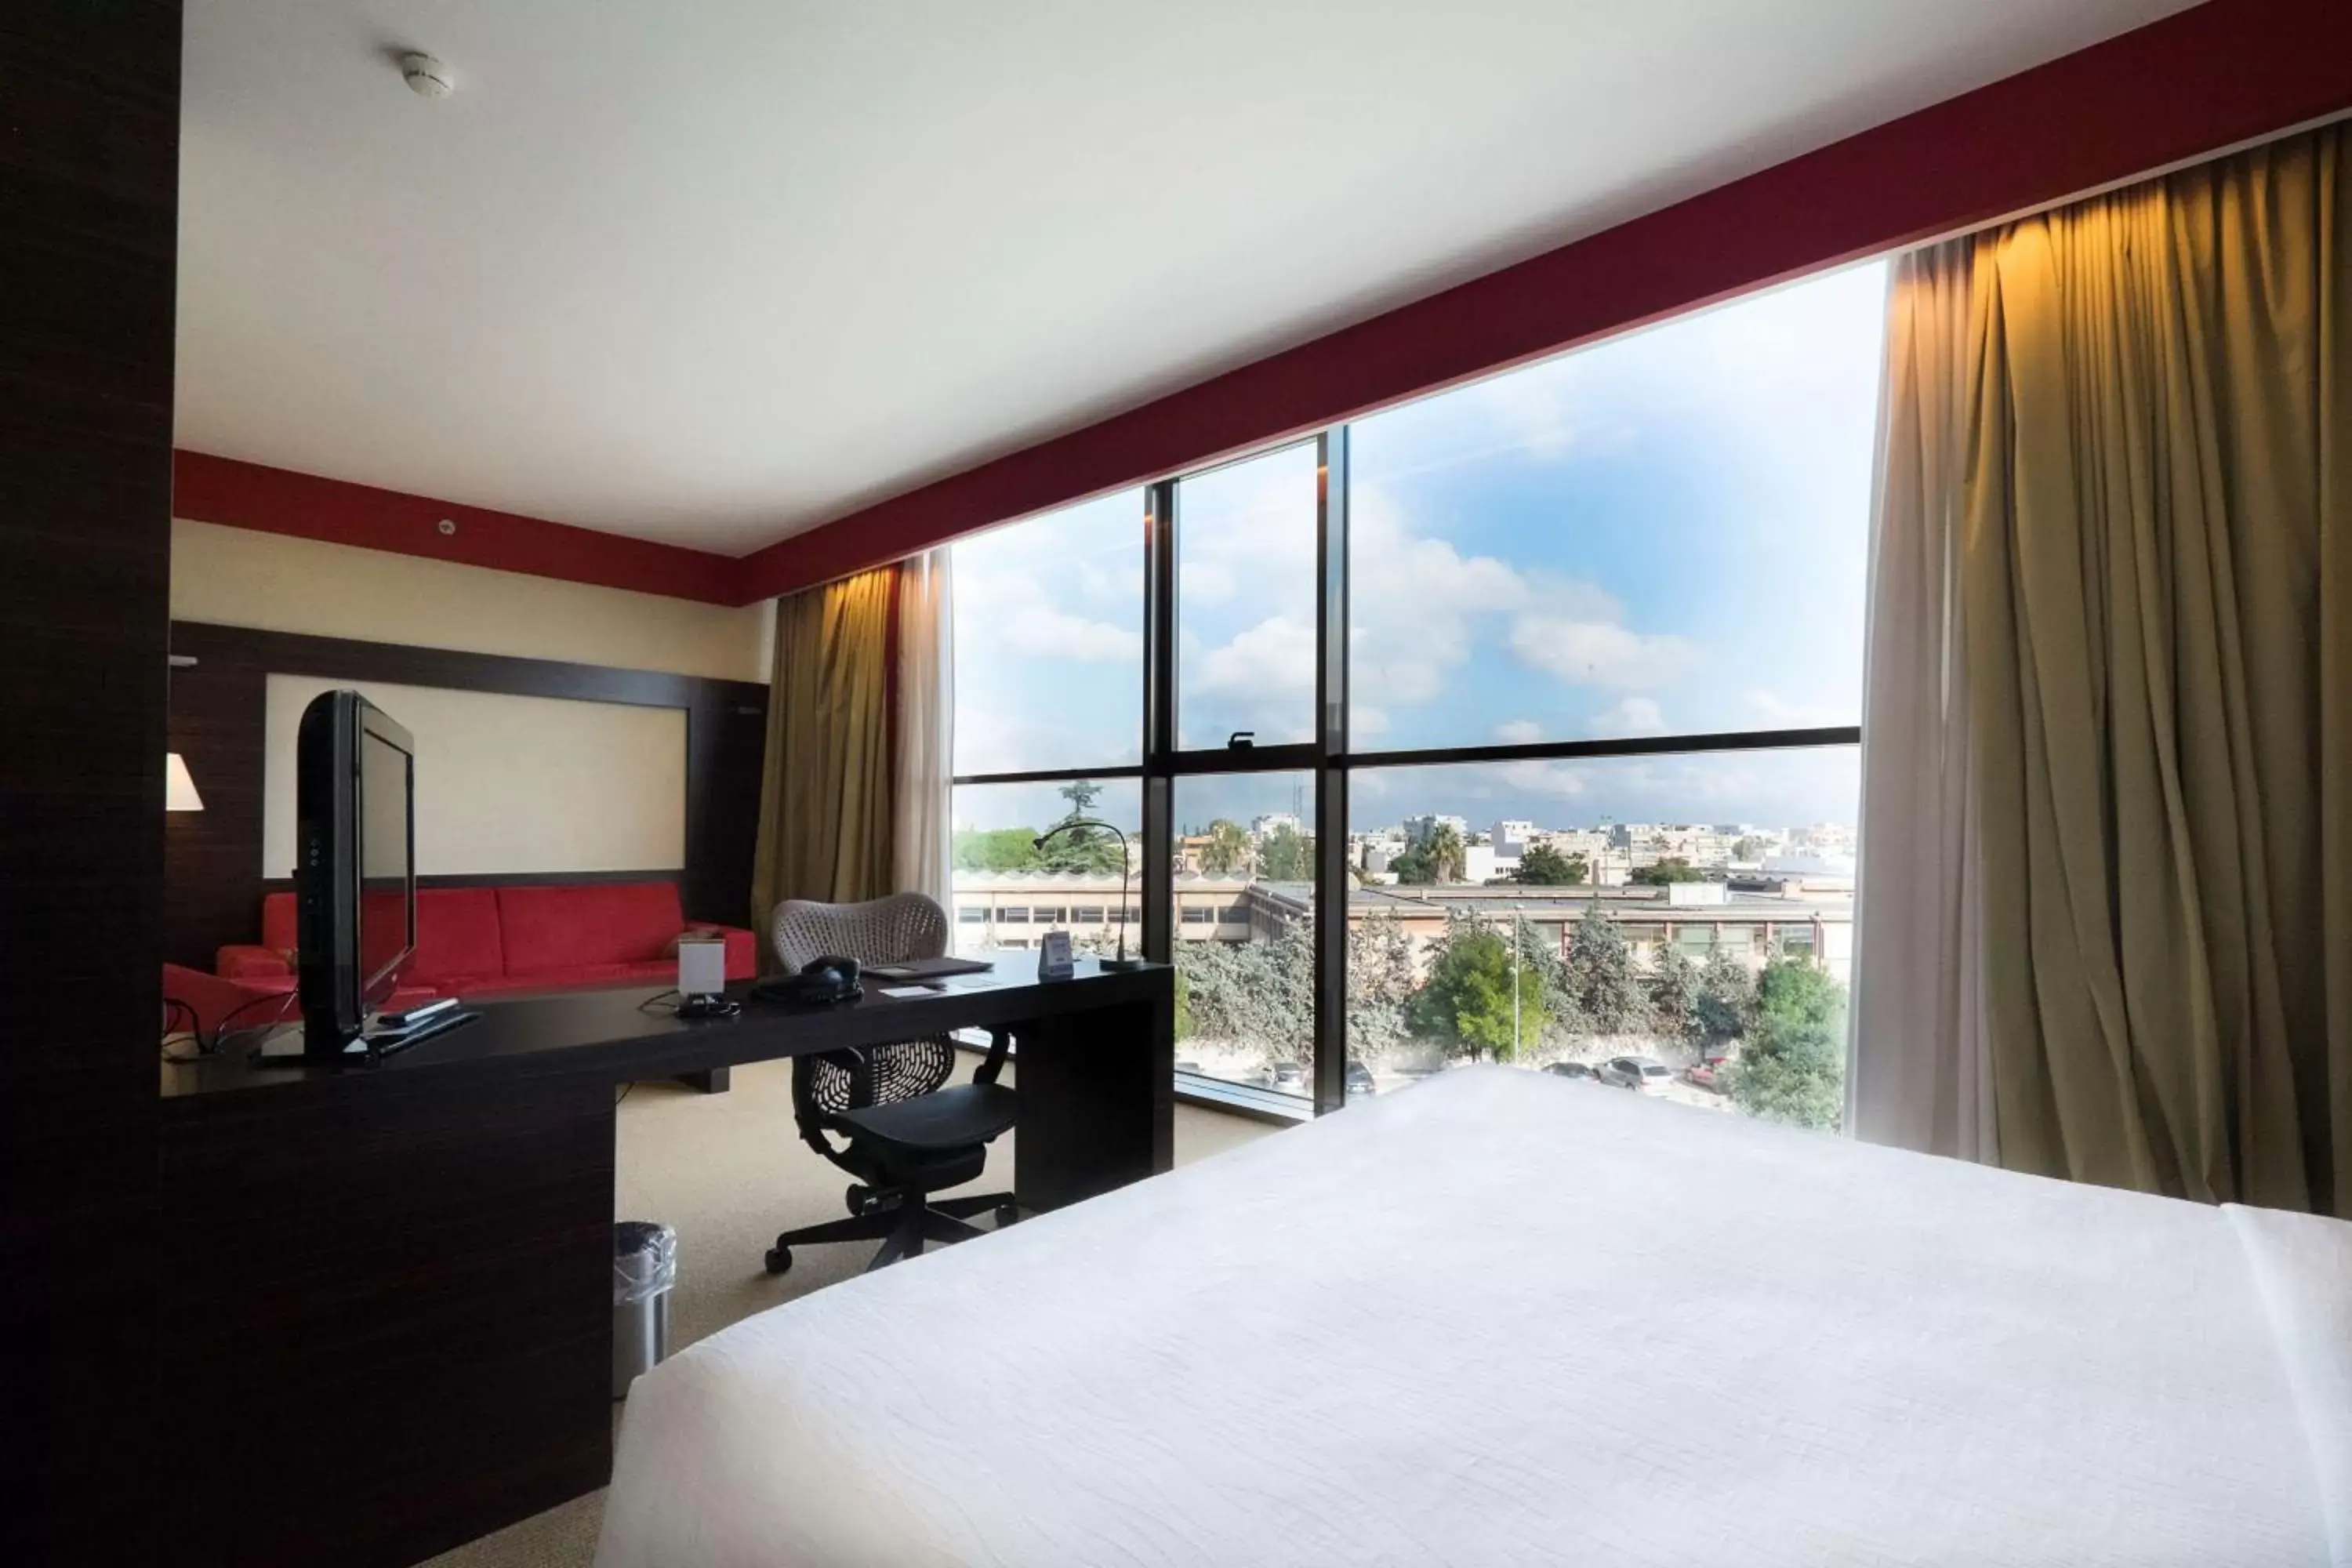 Bedroom in Hilton Garden Inn Lecce